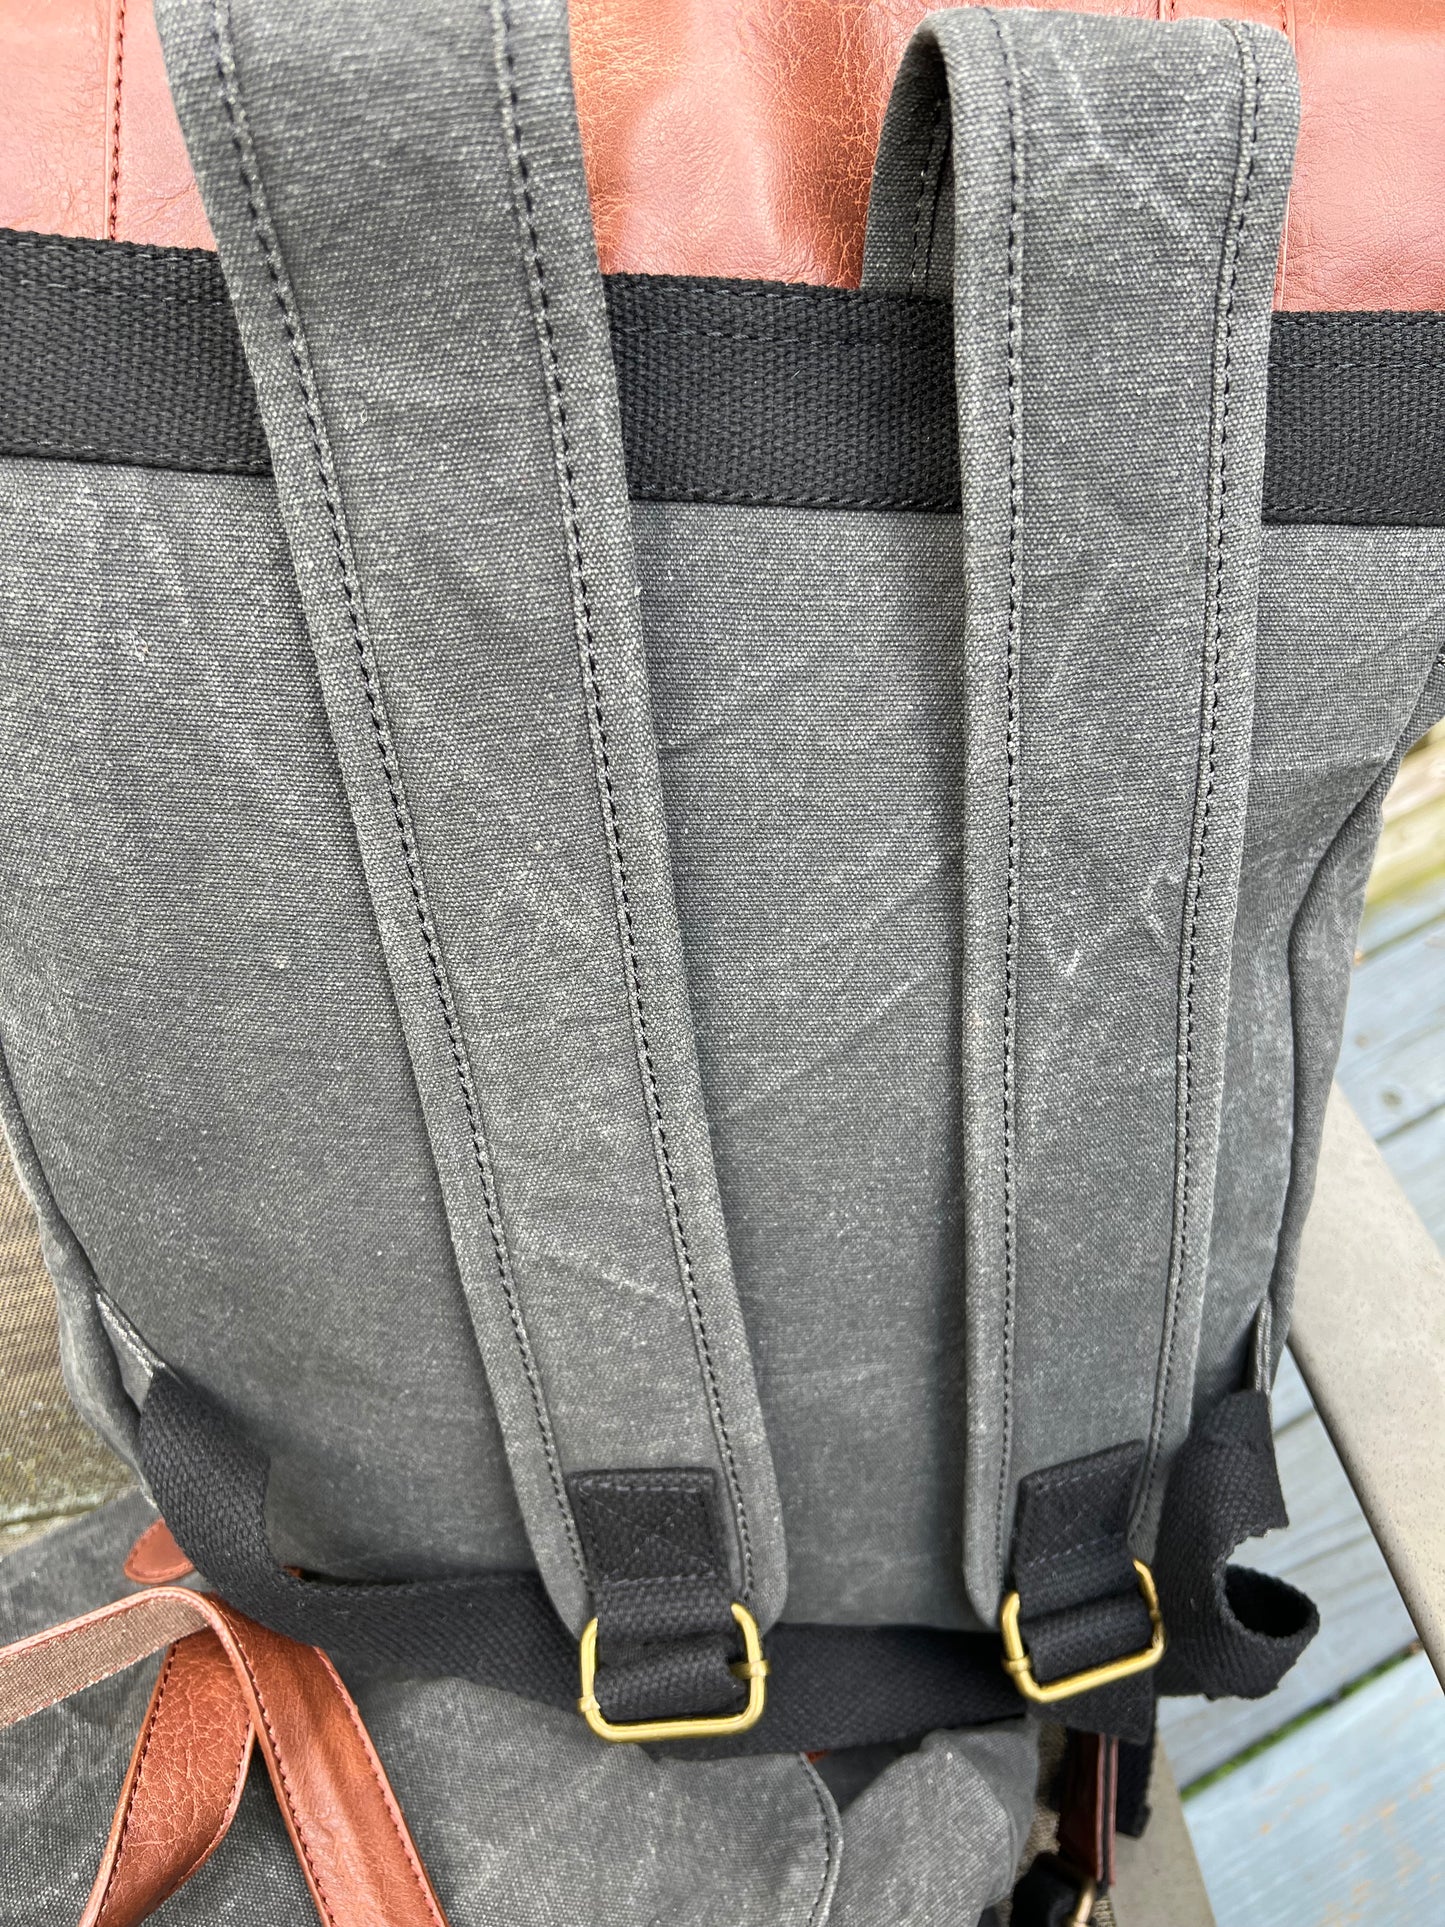 Rugged Black Canvas Backpack